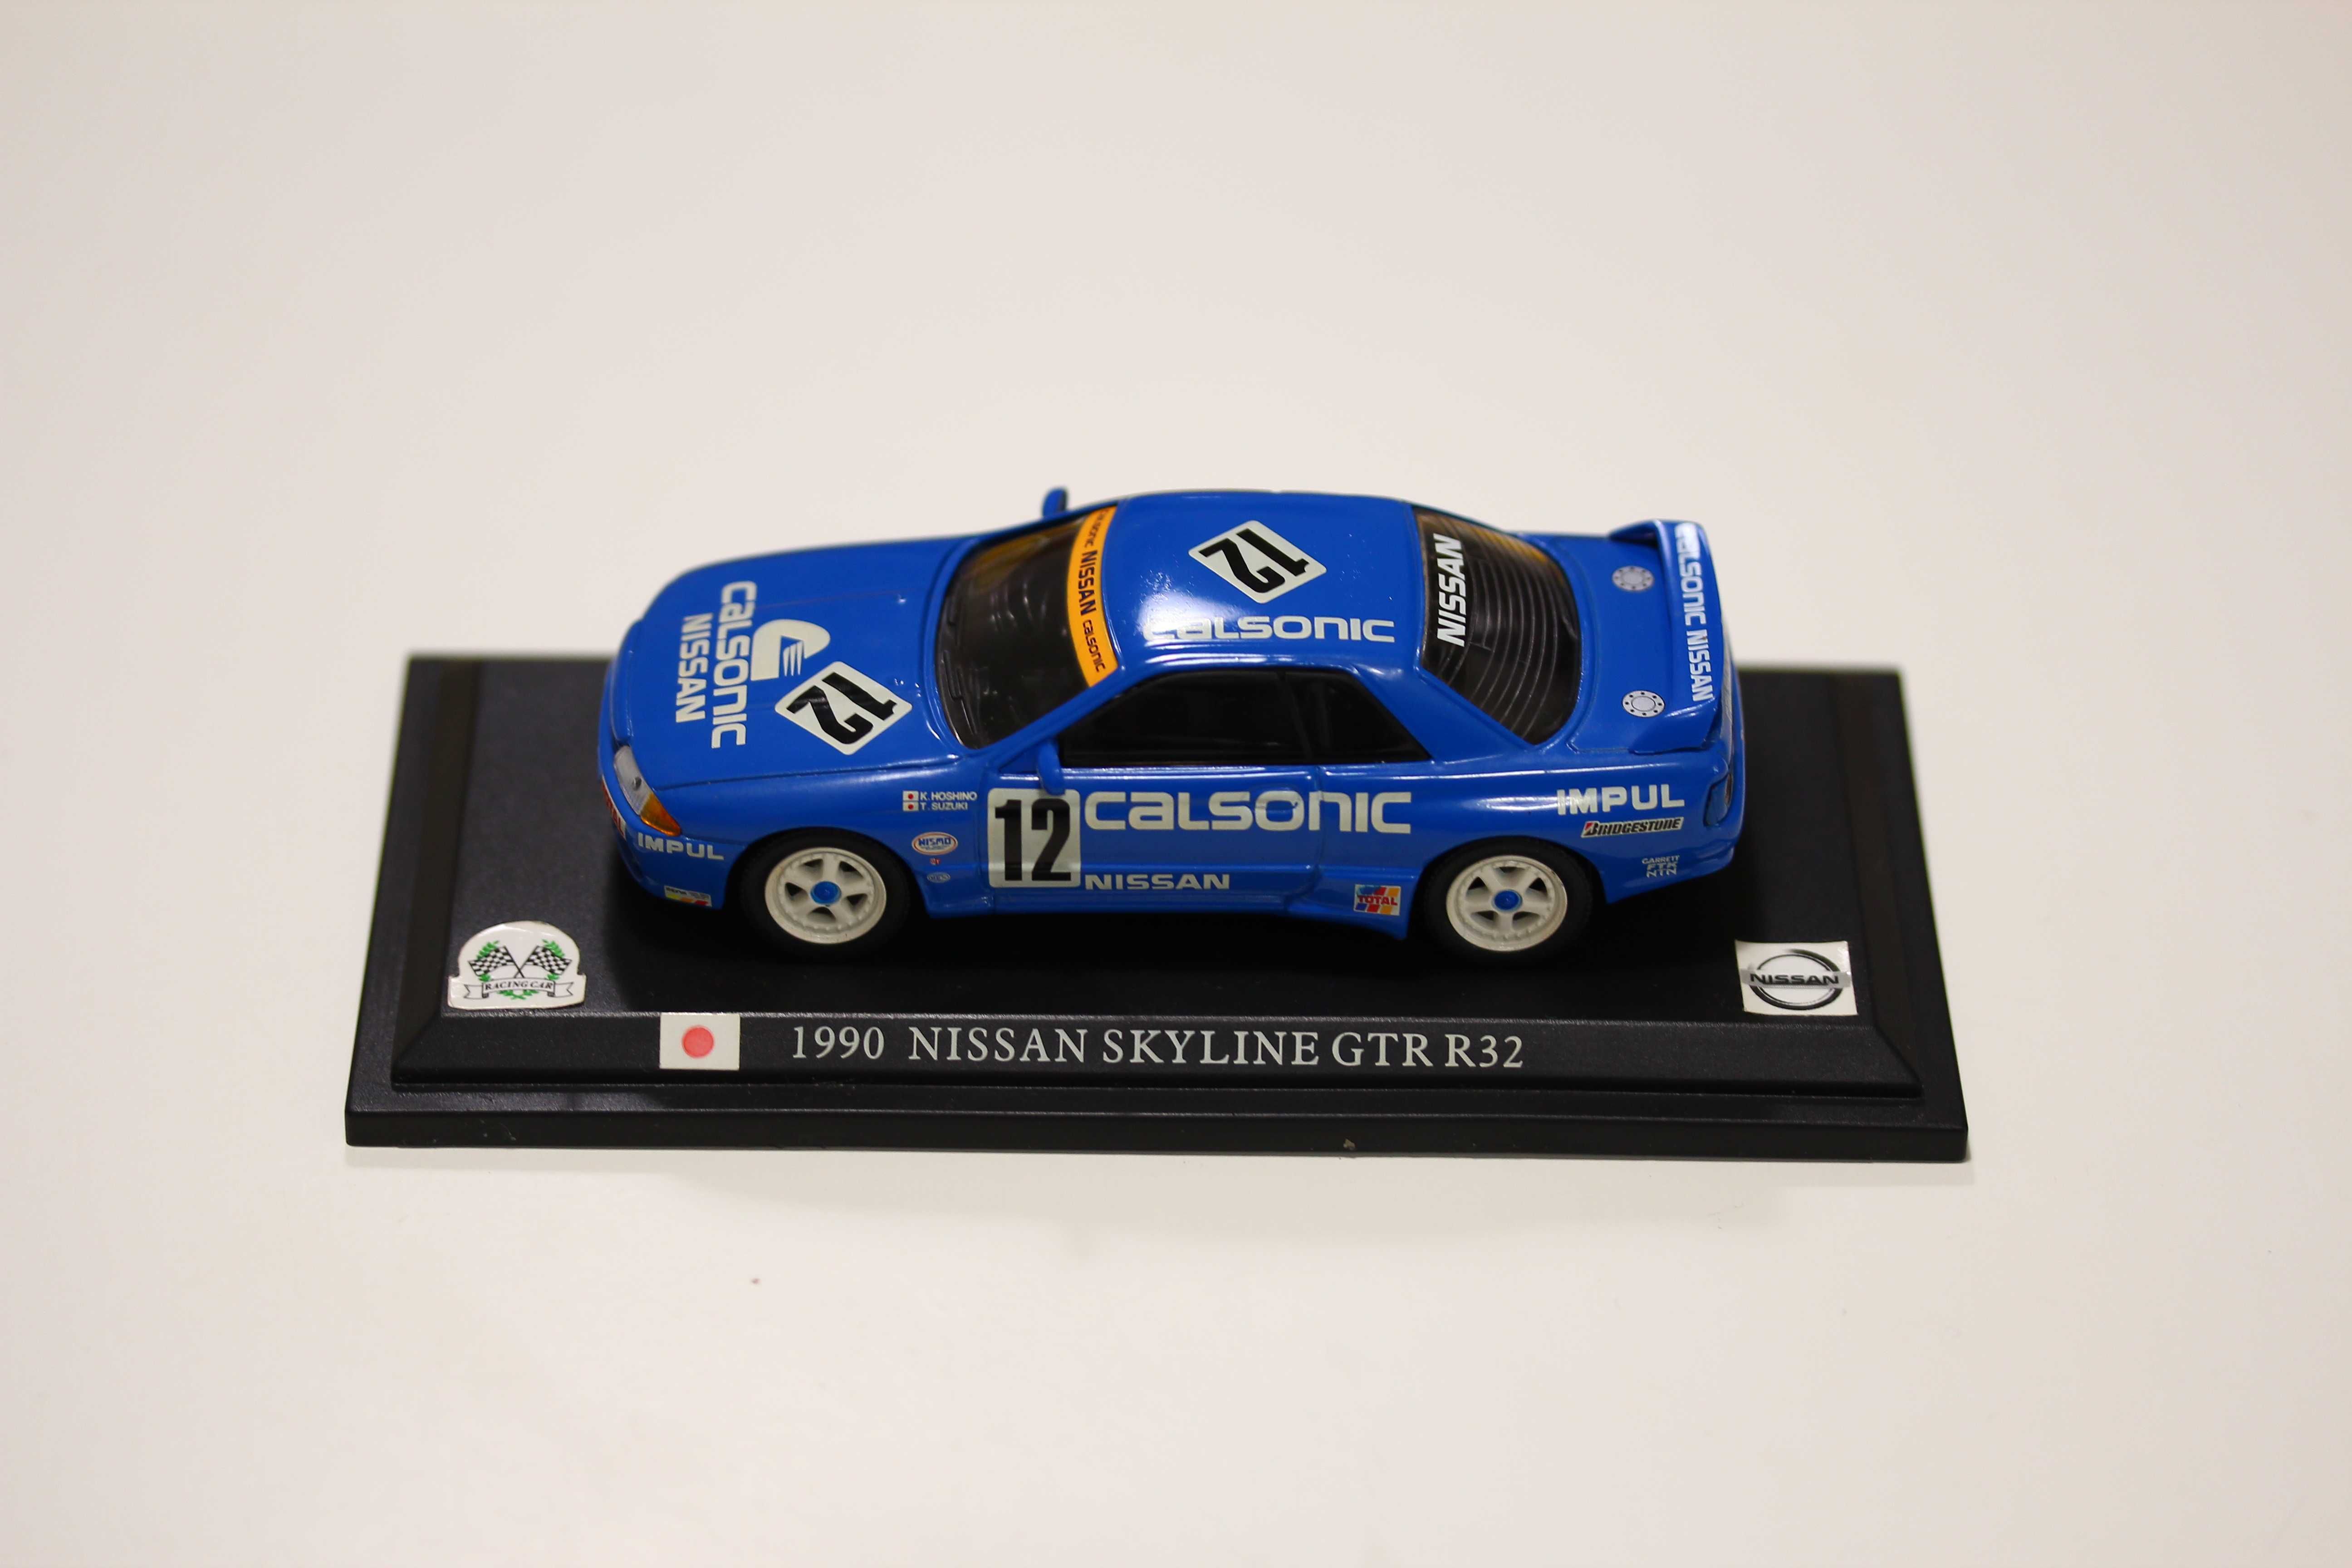 Nissan Skyline GT-R R32, JTCC - Del Prado - 1:43